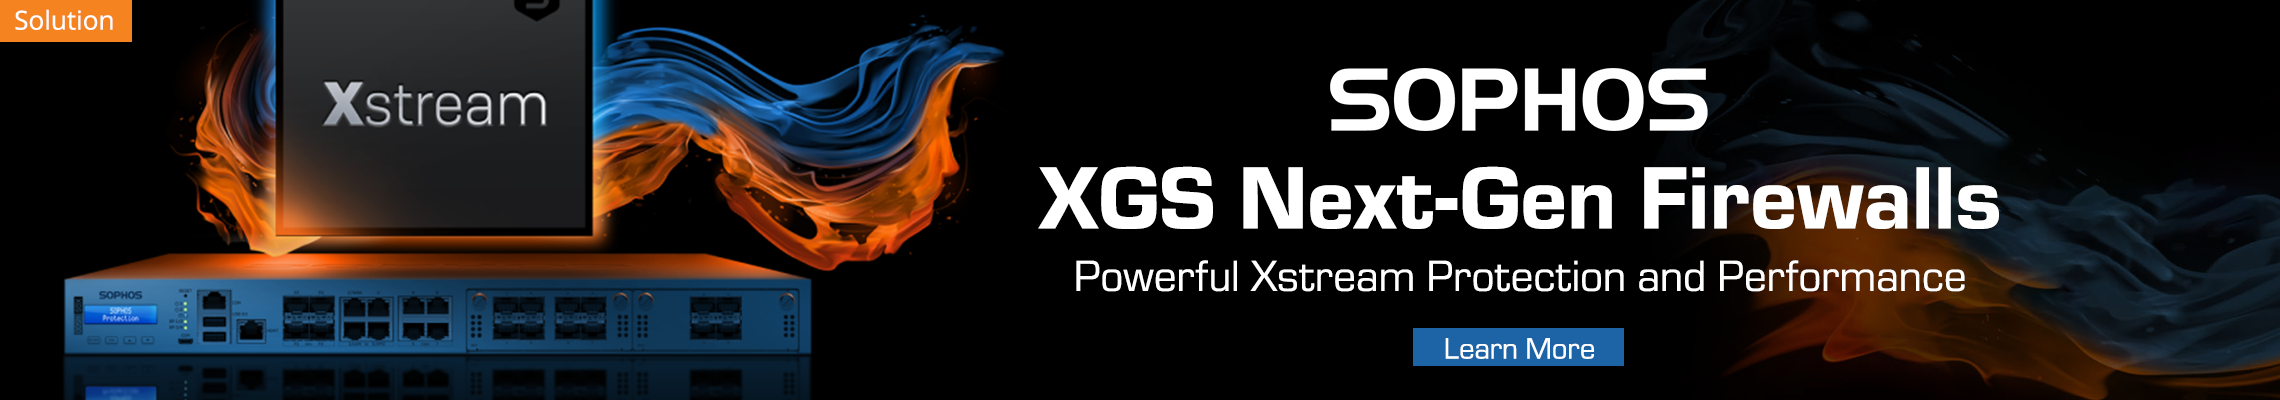 Sophos XGS Firewalls